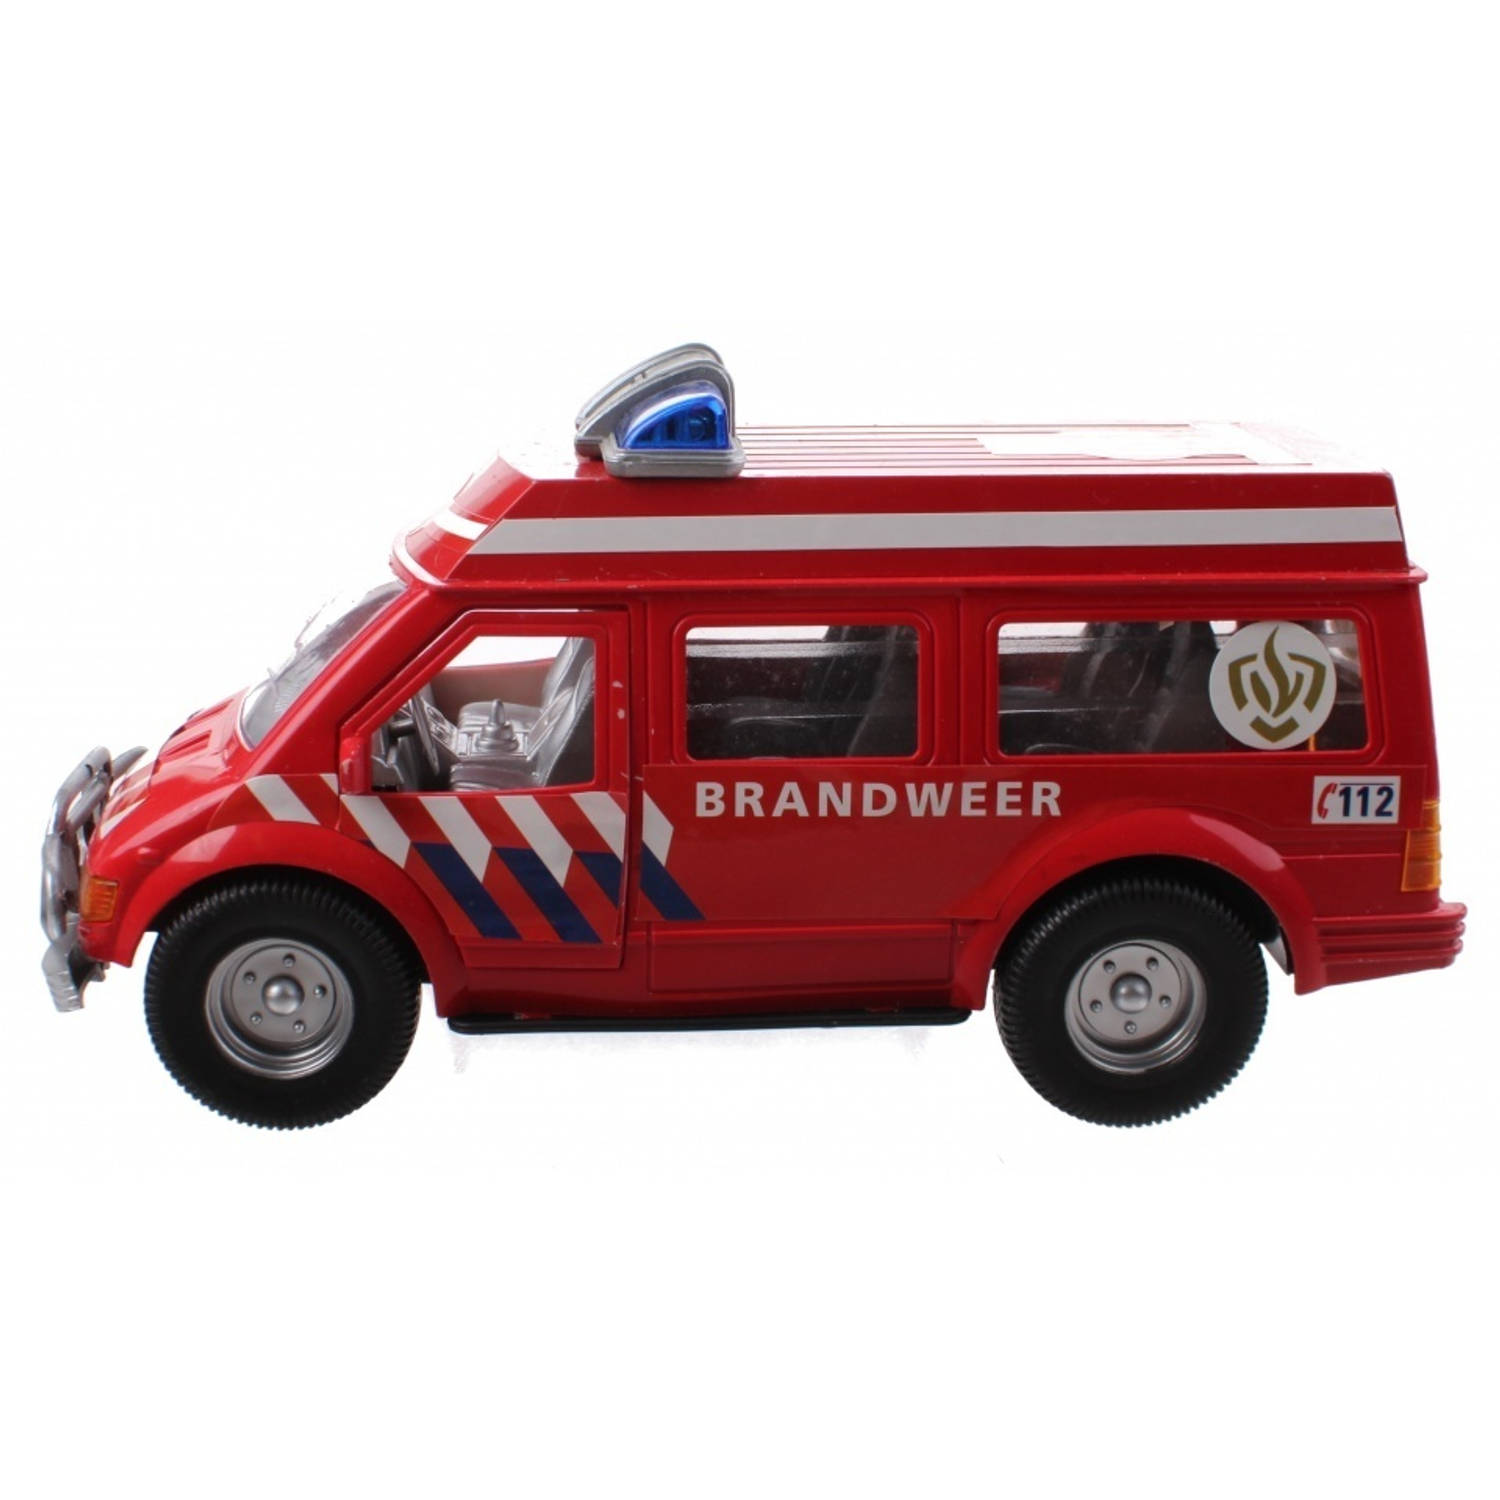 Kids Fun brandweerauto rood 26 cm